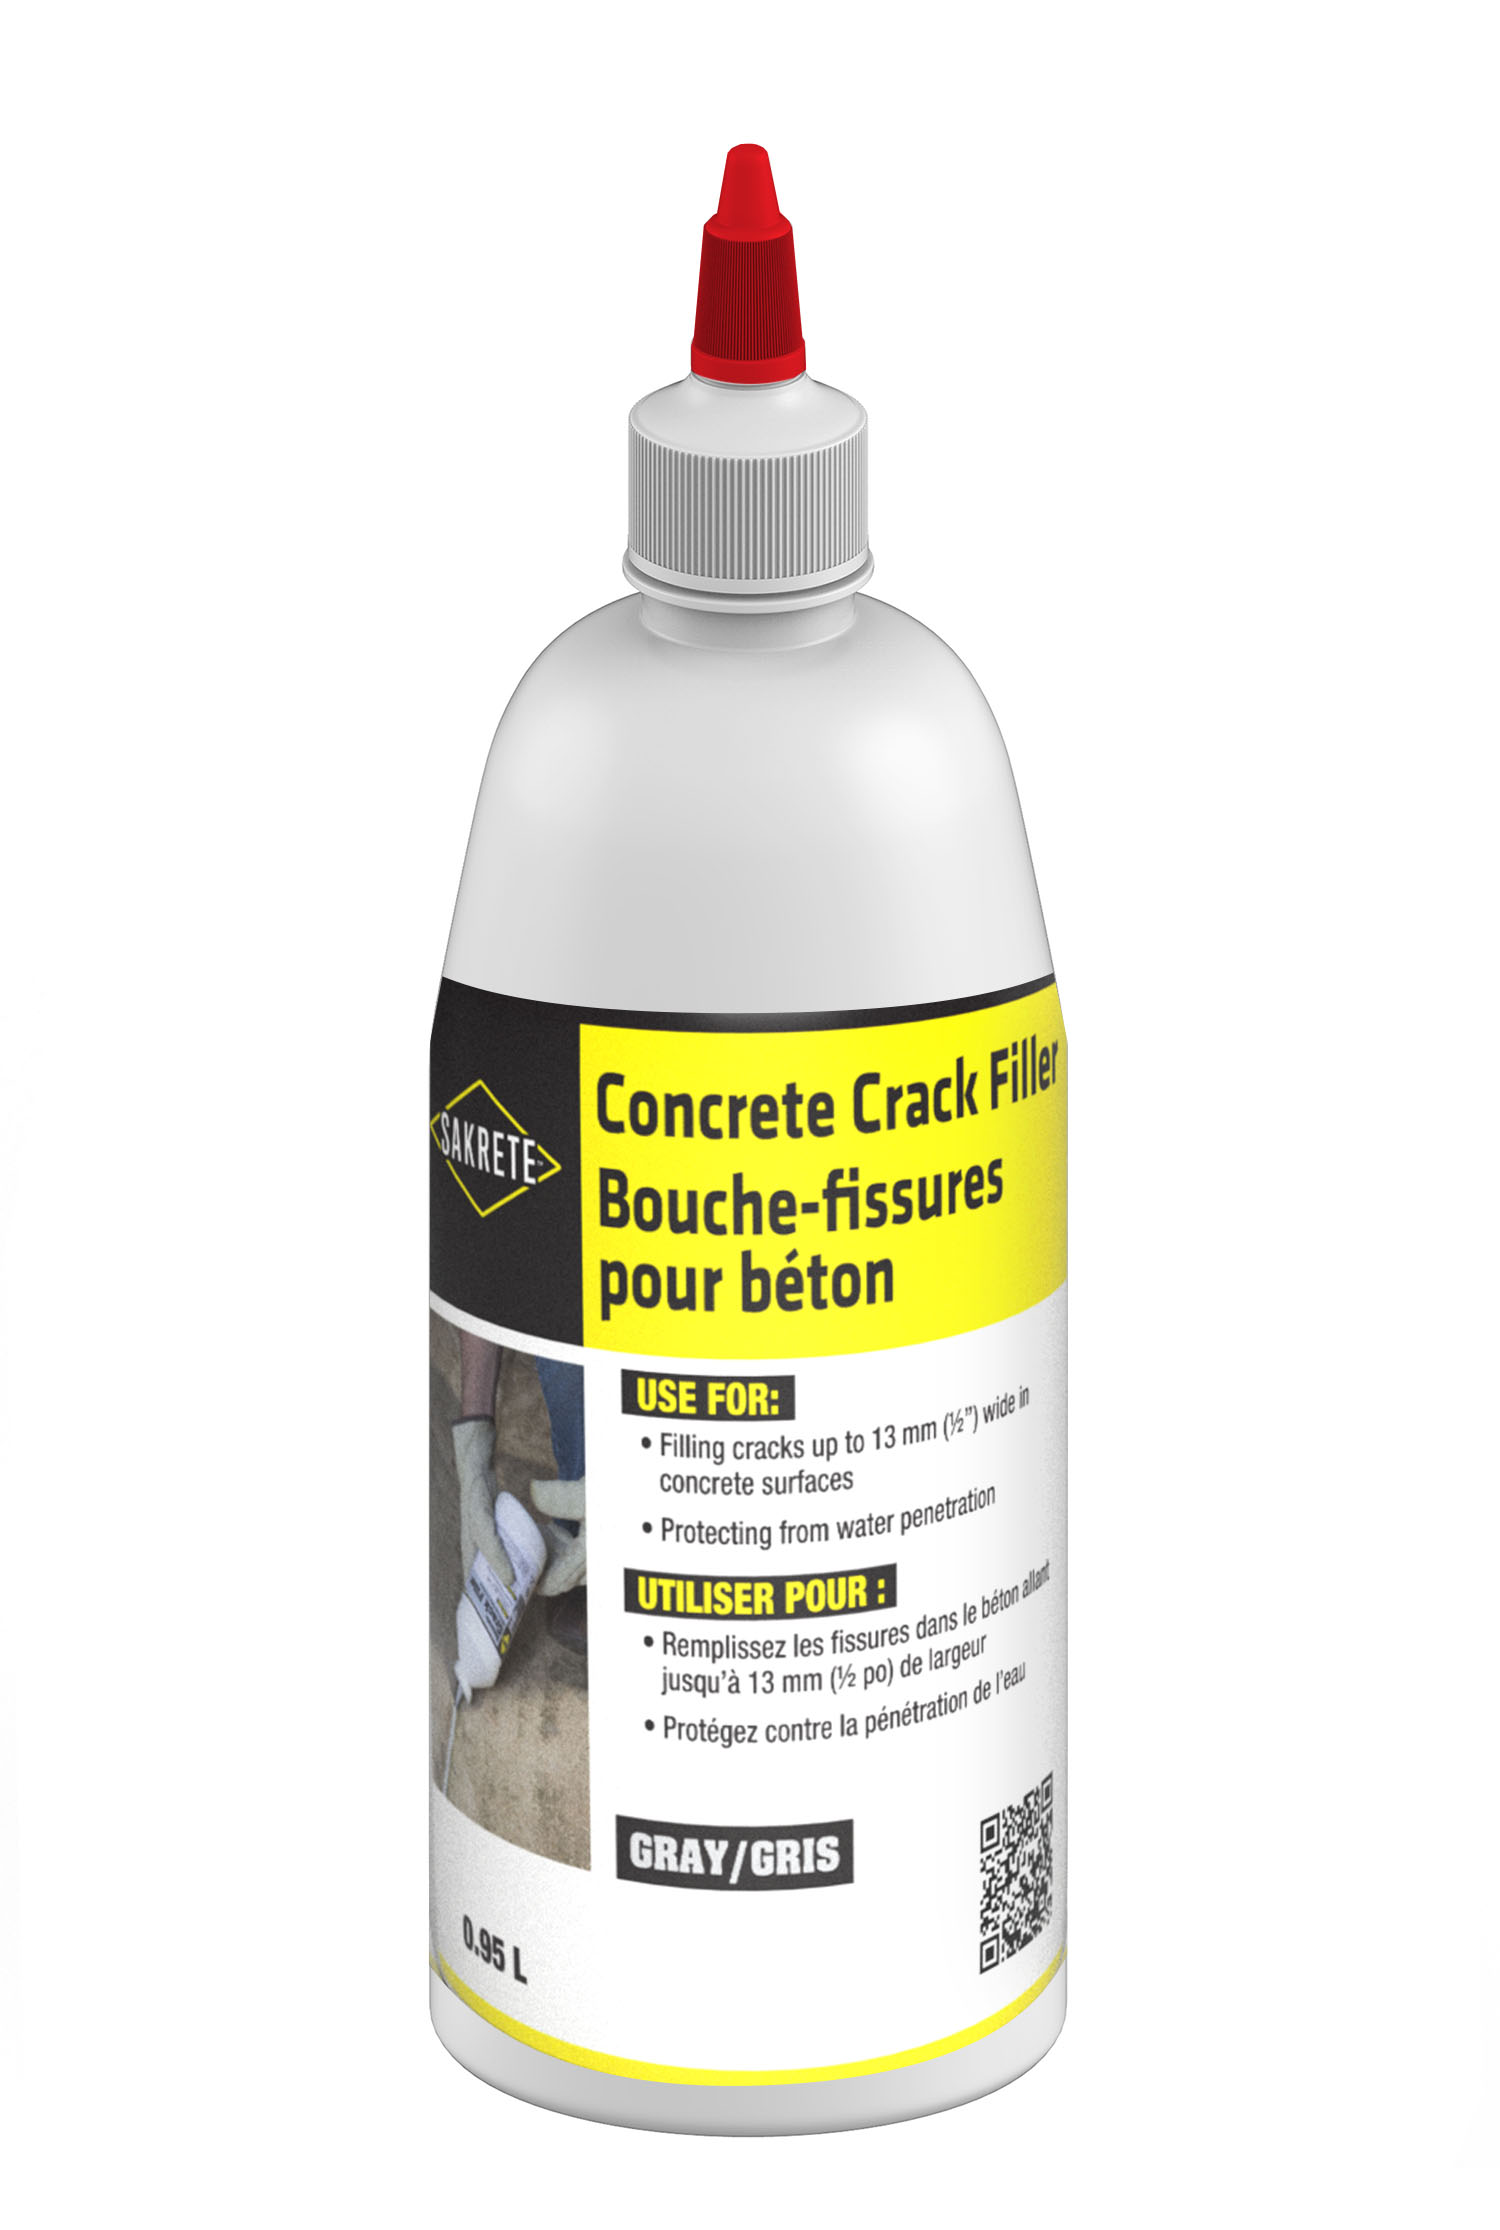 SAKRETE Concrete Crack Filler > KING Home Improvement Products